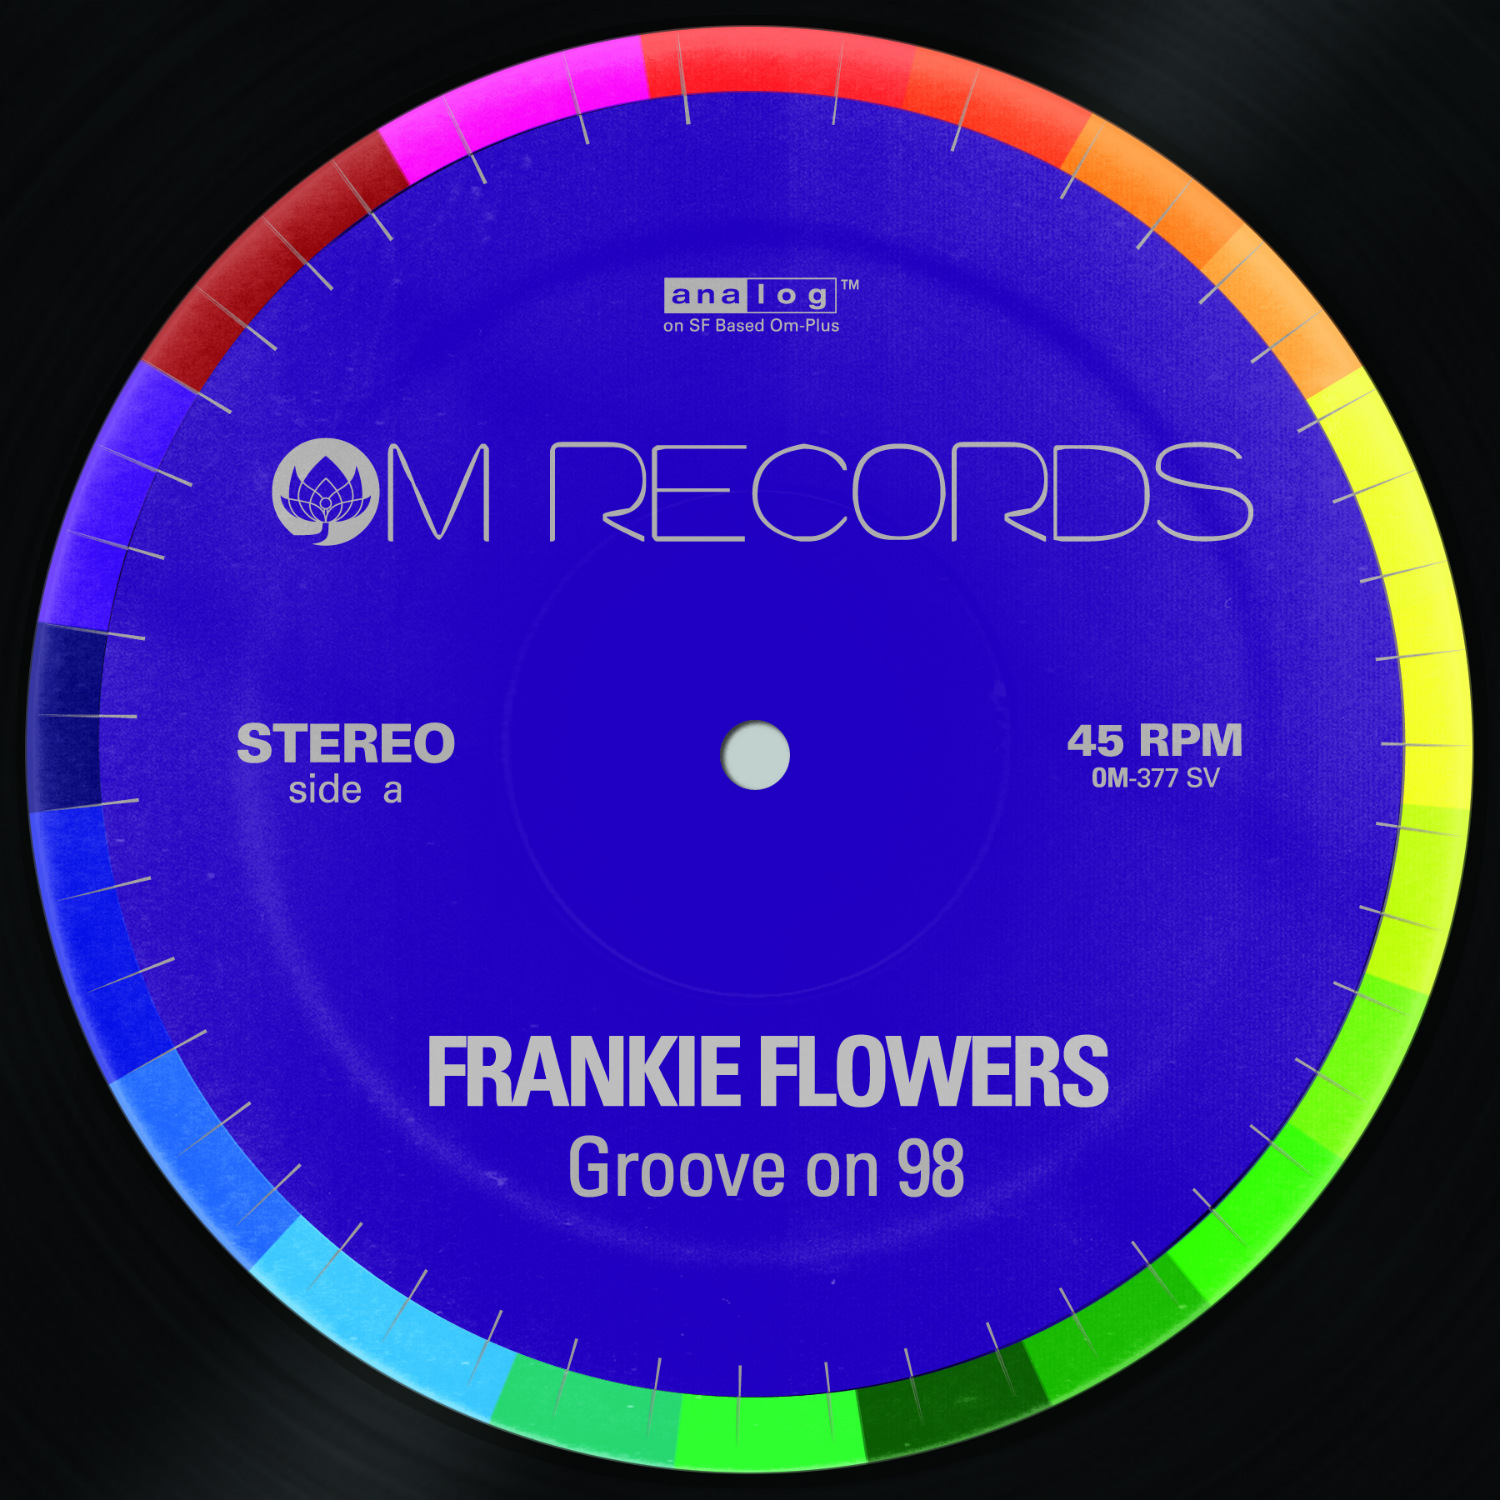 Frankie Flowerz - Groove on 98 EP